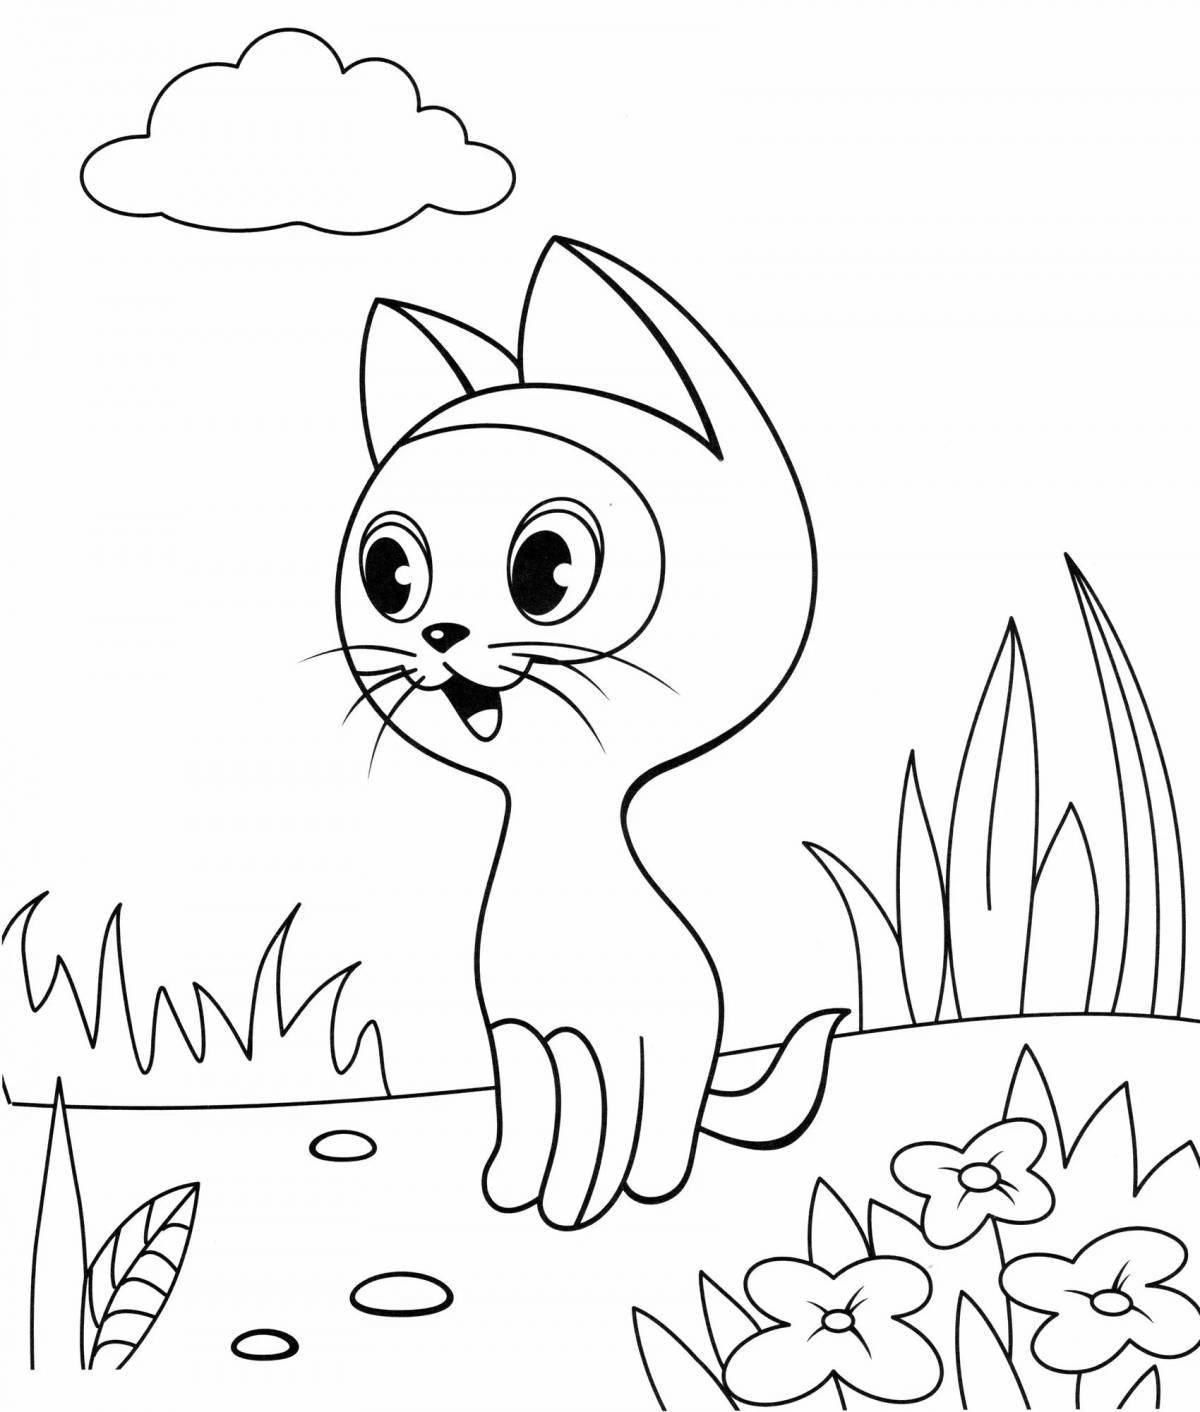 Fabulous kitten woof coloring book for kids